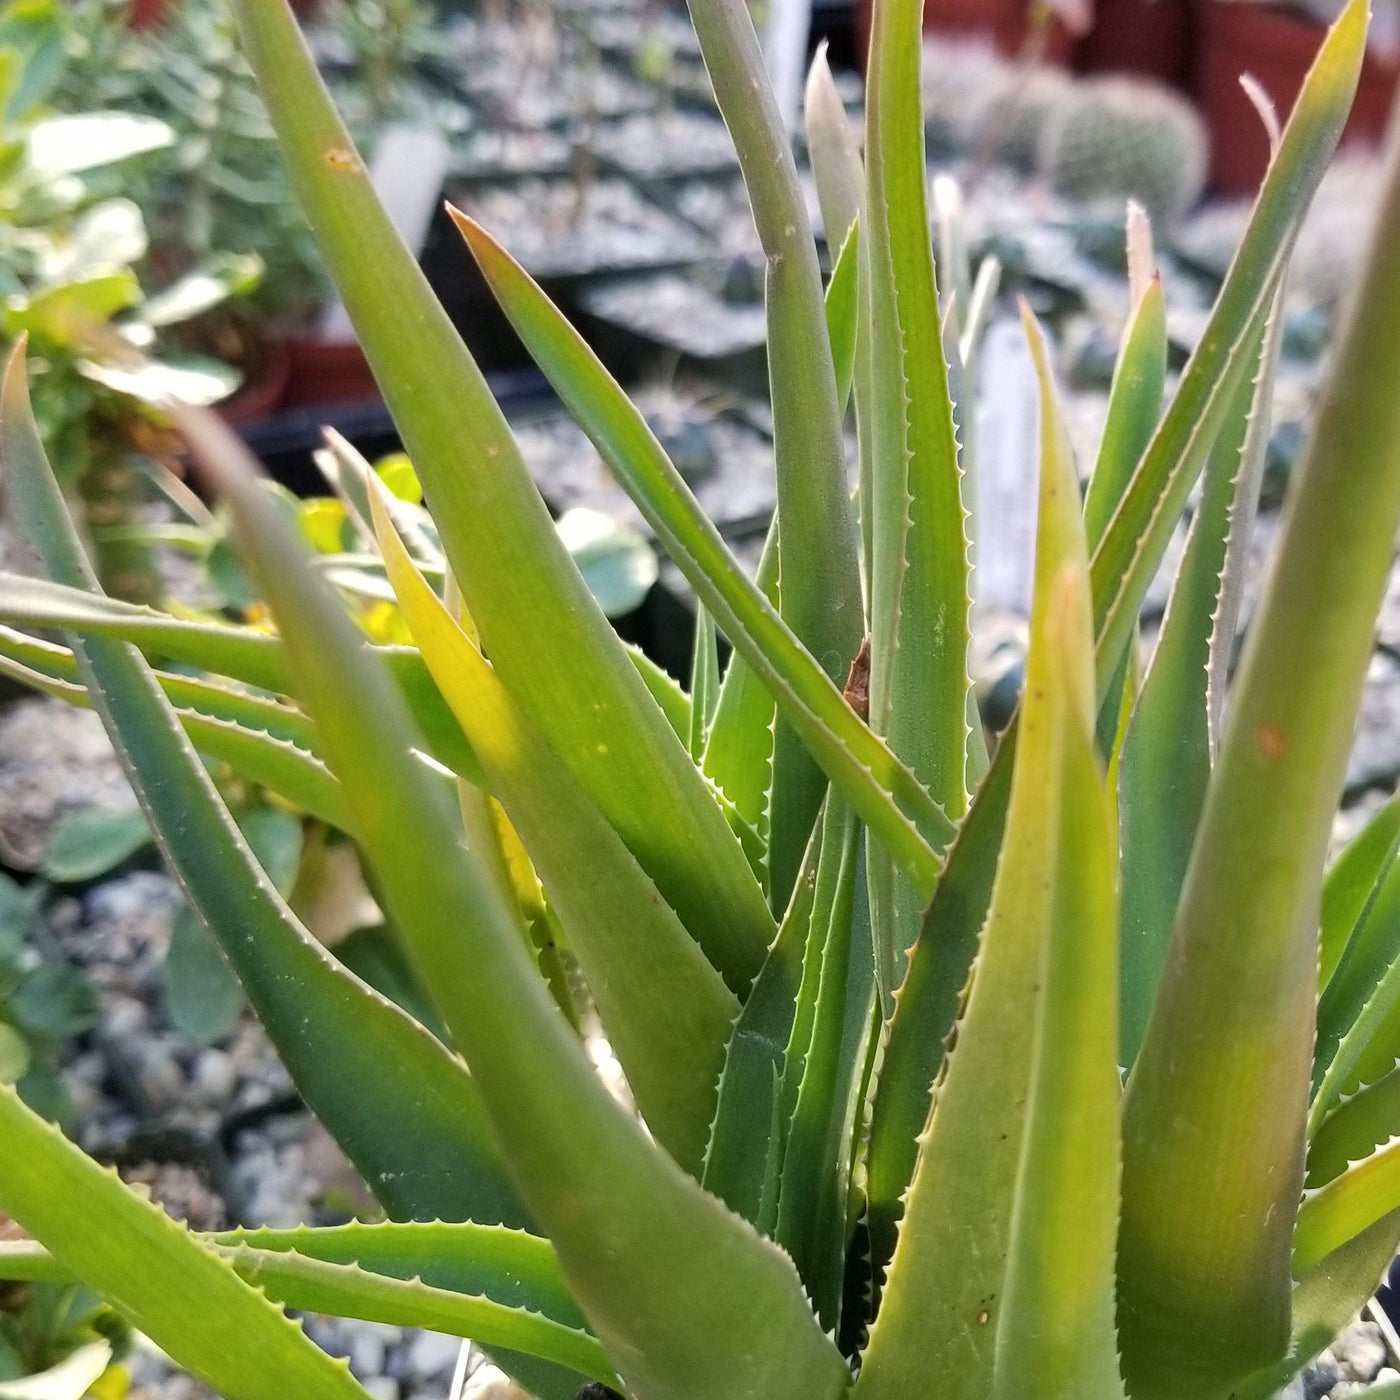 Climbing Aloe – Aloe ciliaris